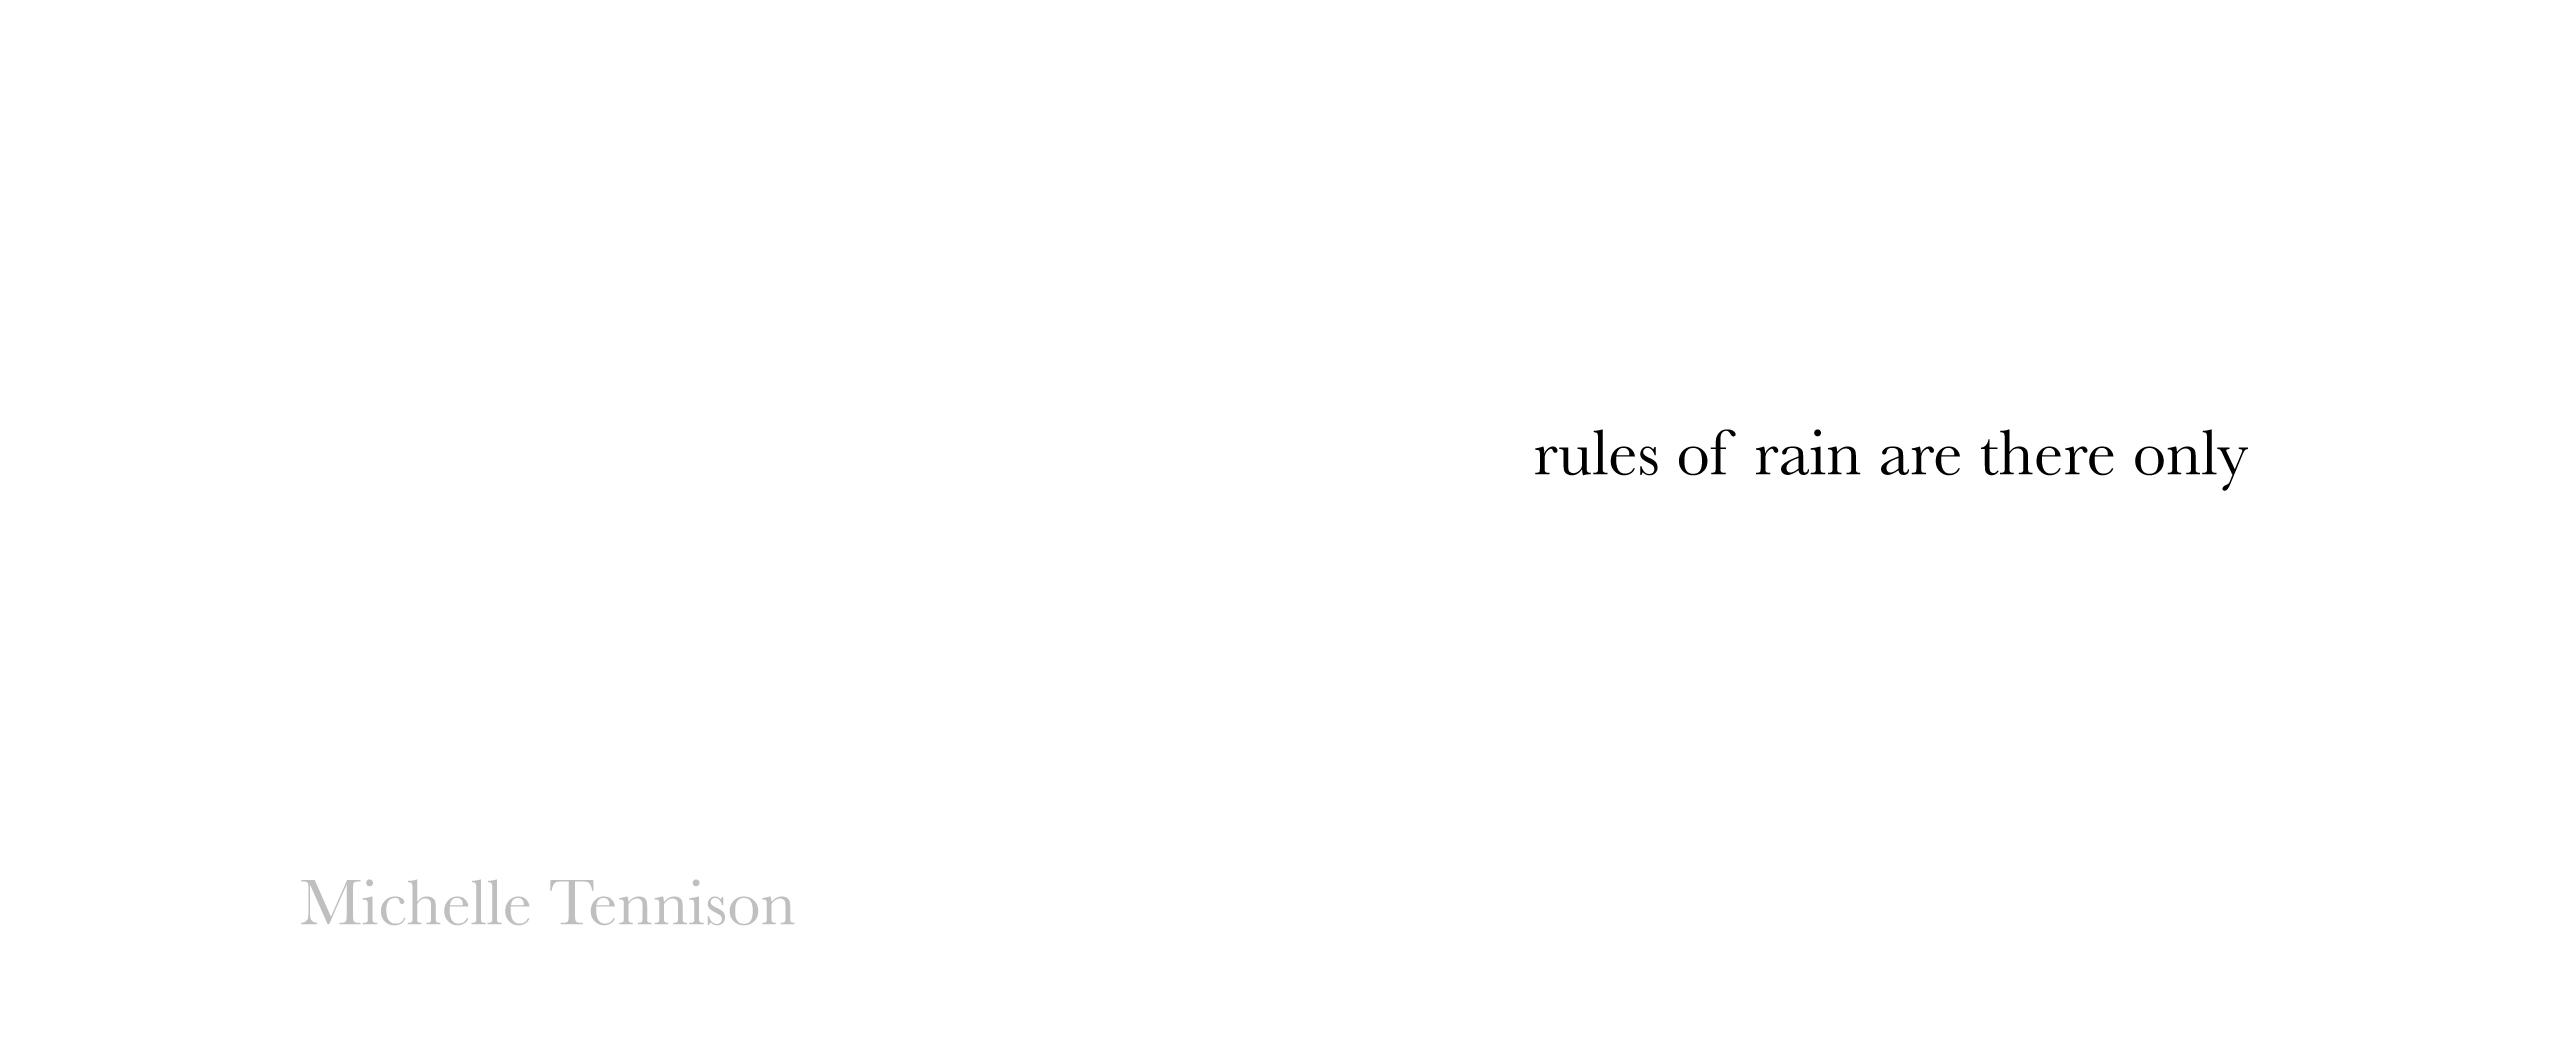 rules-of-tennison.jpg